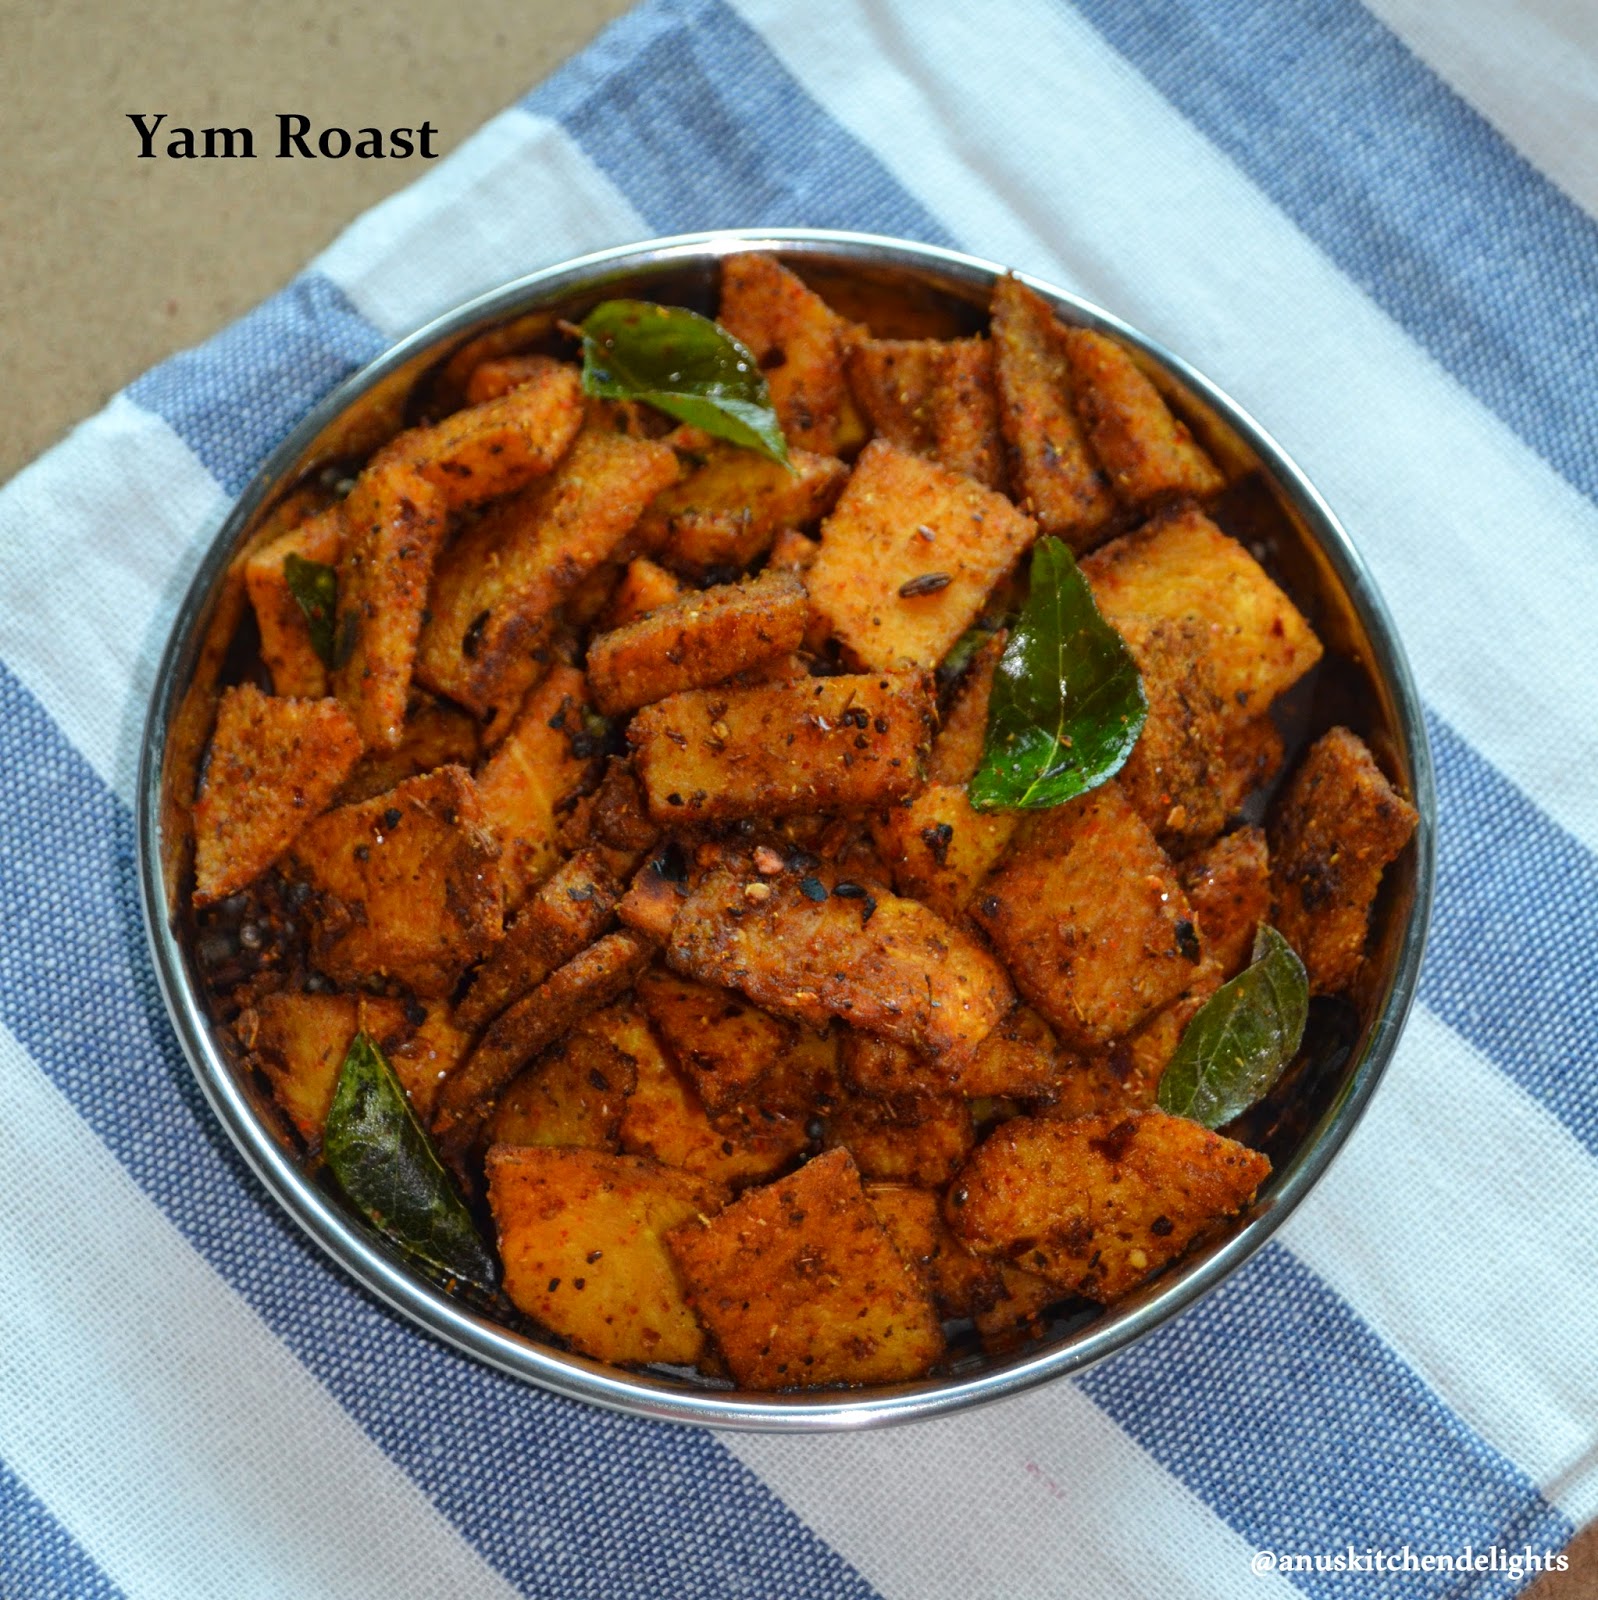 Anu's Kitchendelights: Senai Kizhangu Varuval / Elephant Yam Roast Recipe